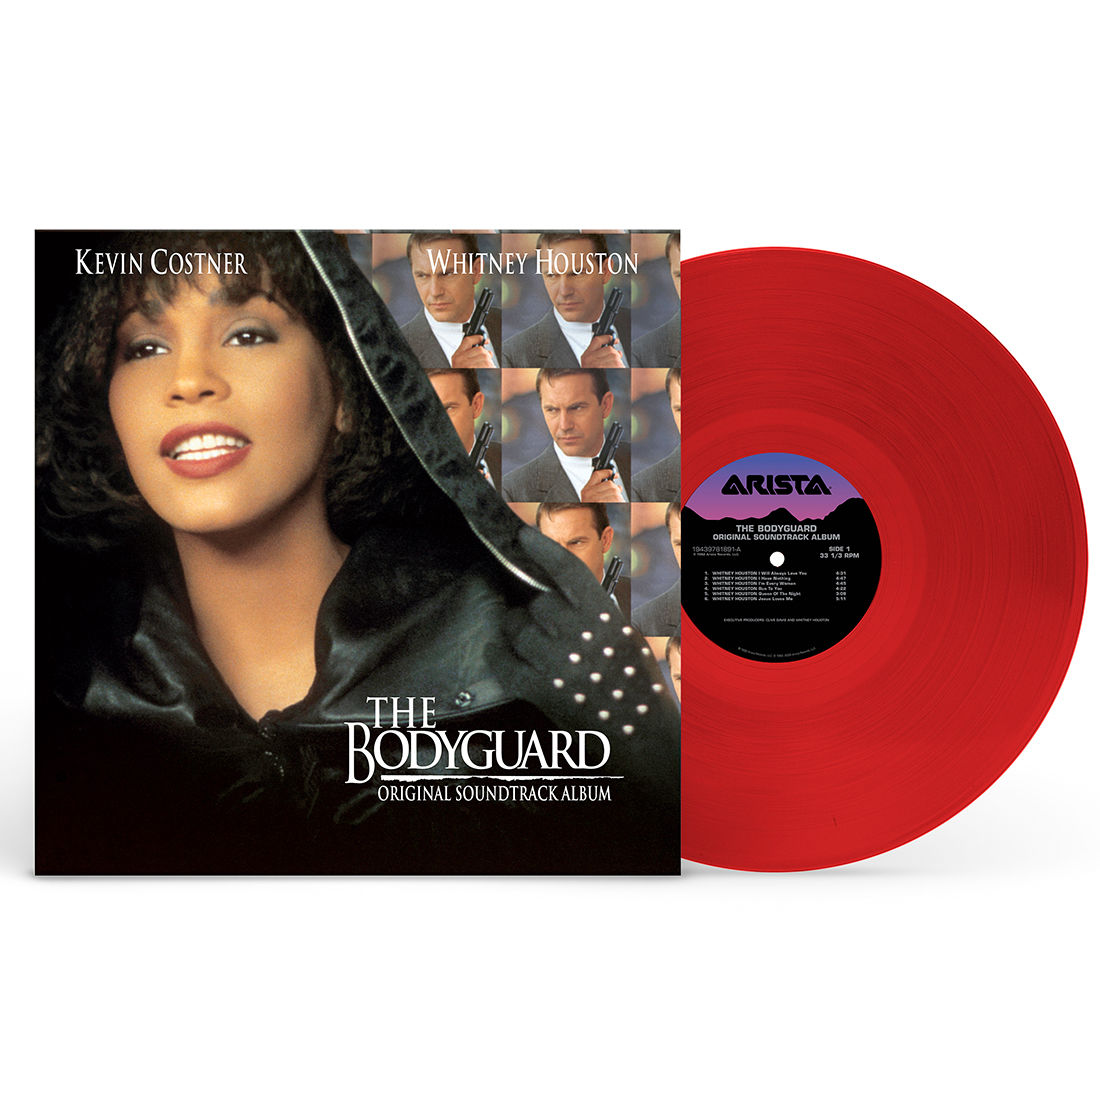 The Bodyguard (Original Soundtrack Album) (30th Anniversary Edition) (Red Vinyl)